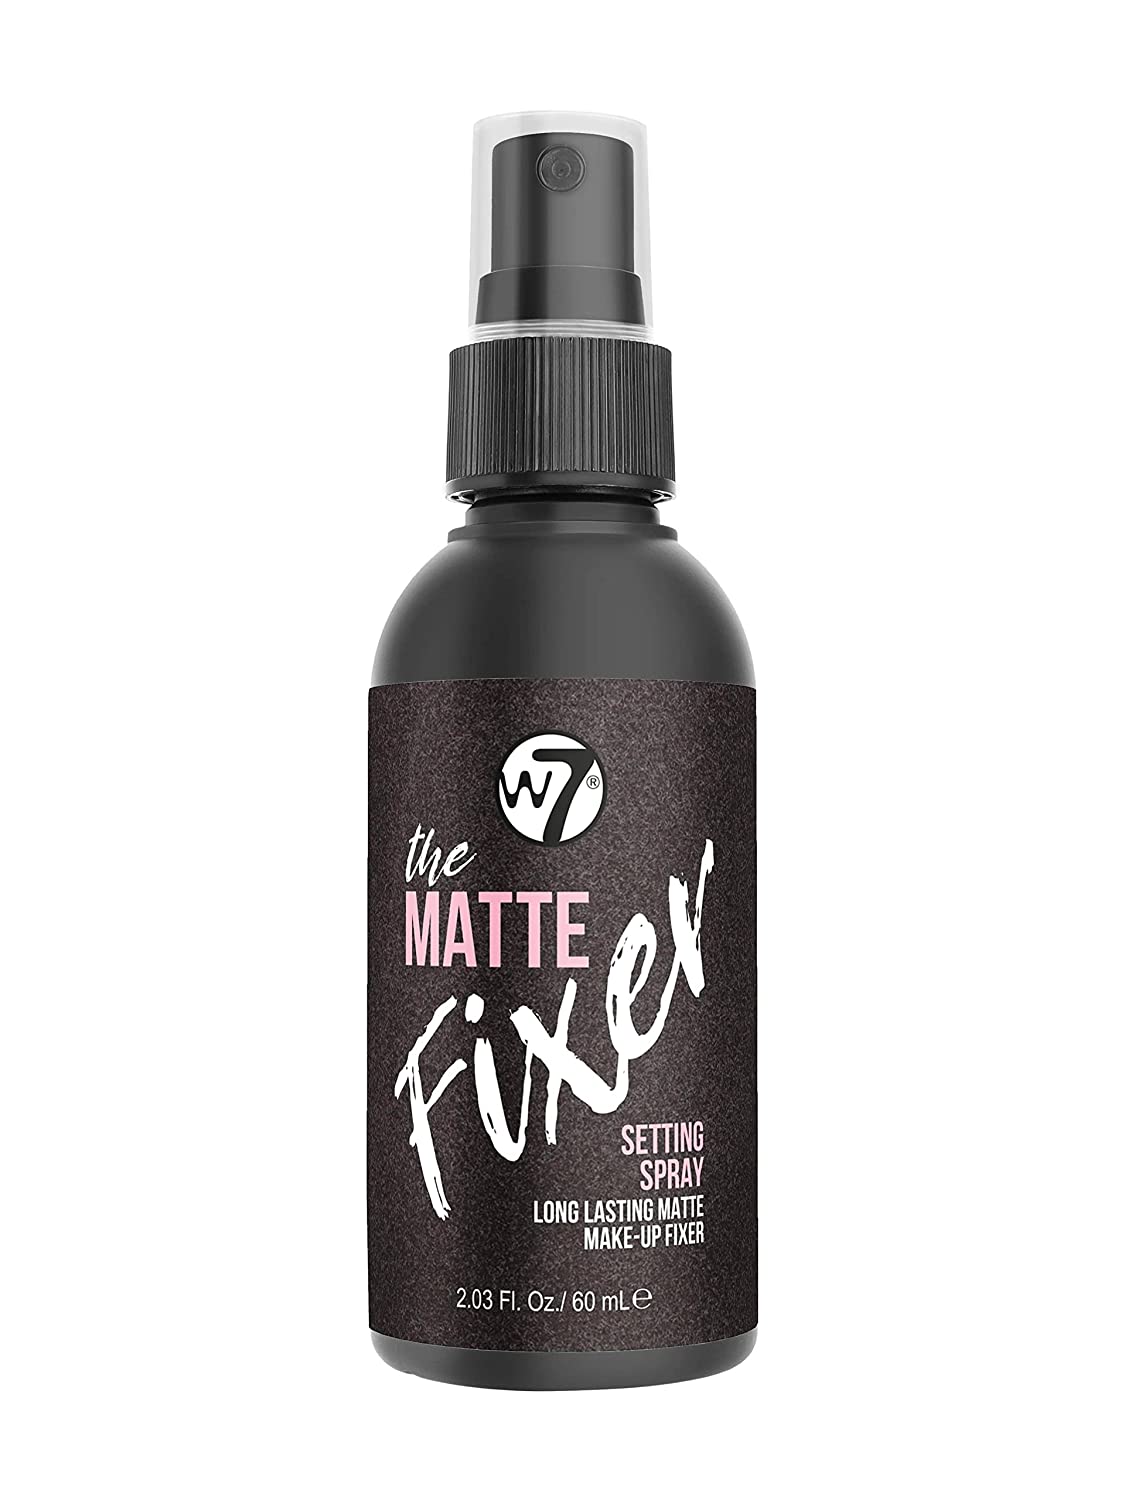 W7 The Fixer Makeup Setting Spray - Mattes Finish - Long -lasting, ultra -fine Formula - Cruethy Free and Vegan